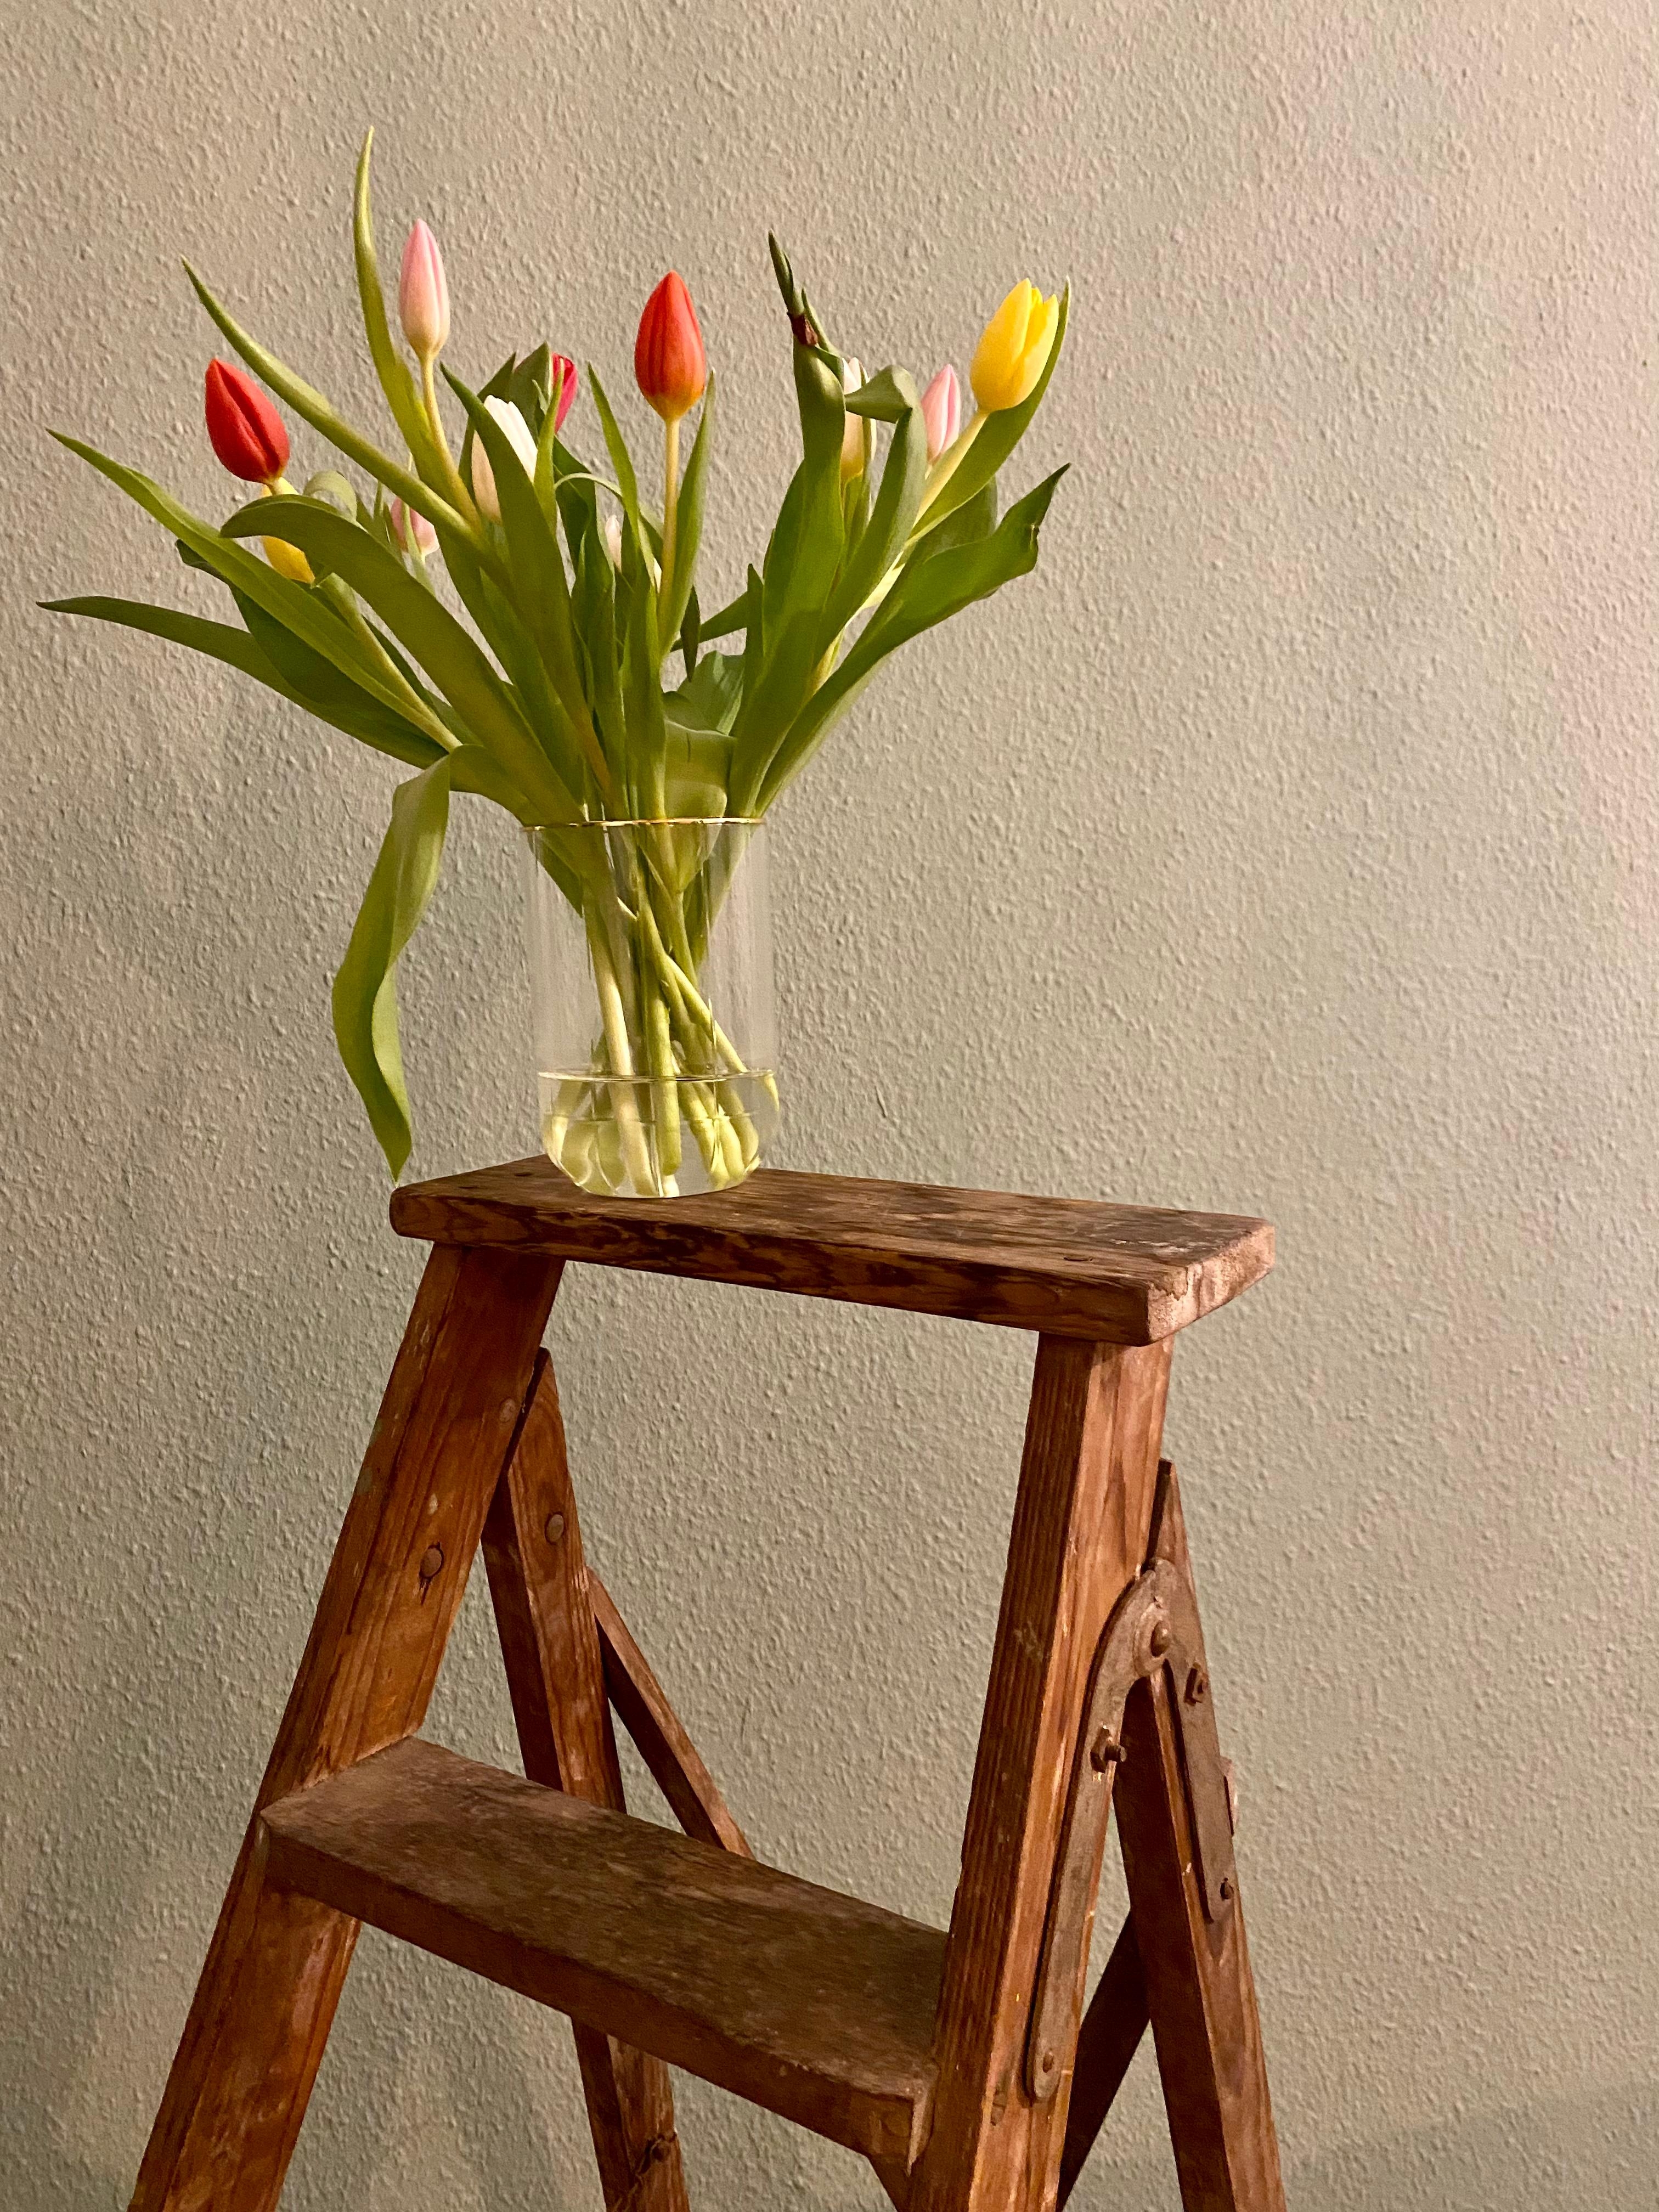 Frühlingsgefühle 🌞🌷
#tulpen #frühling #bunt #blumen #vintage #holzleiter #wandfarbe 